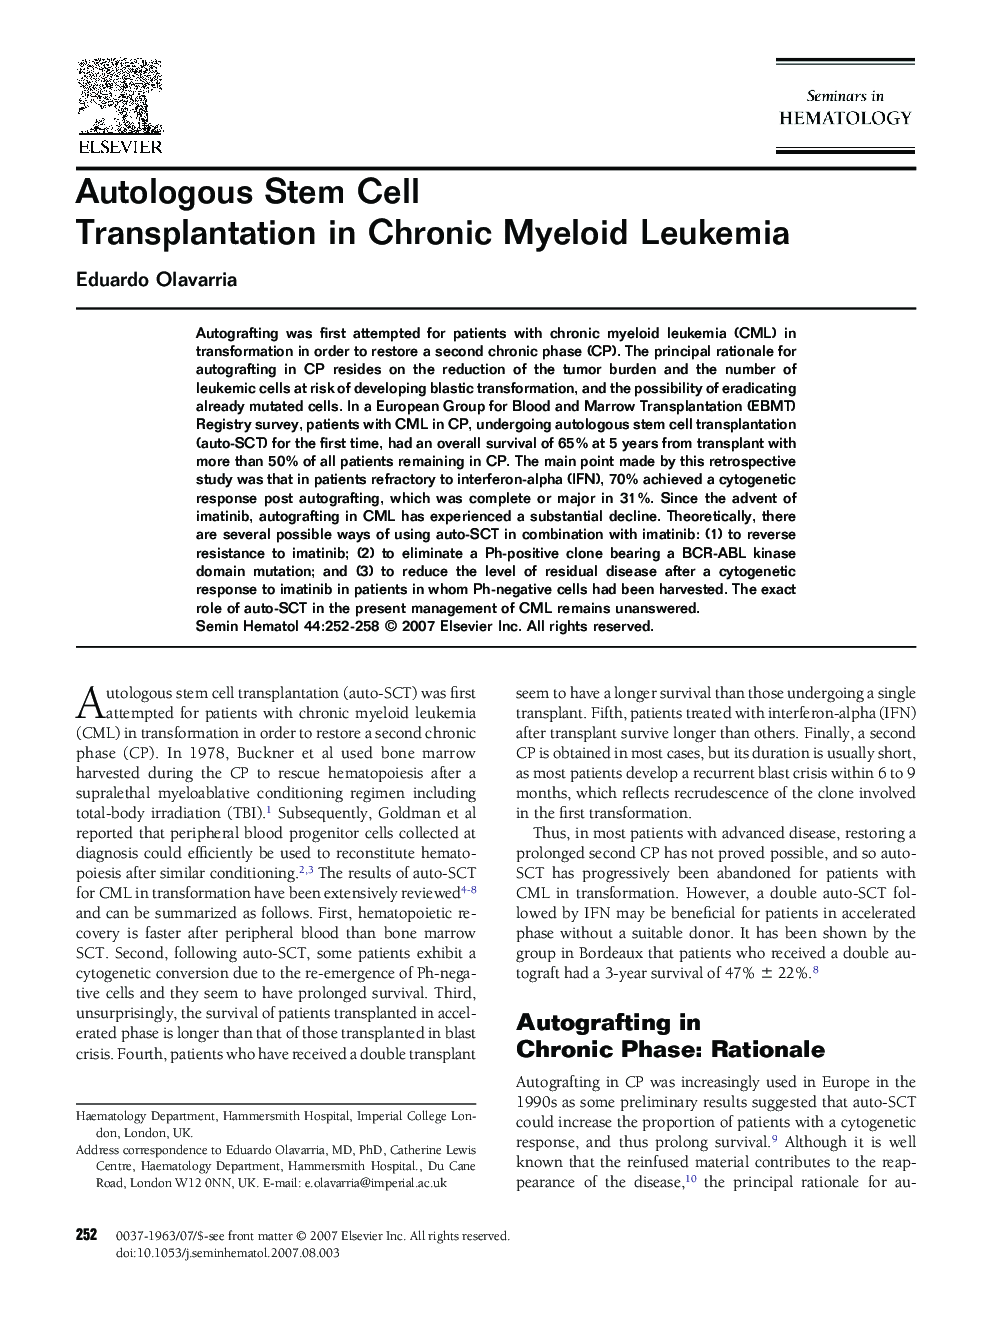 Autologous Stem Cell Transplantation in Chronic Myeloid Leukemia